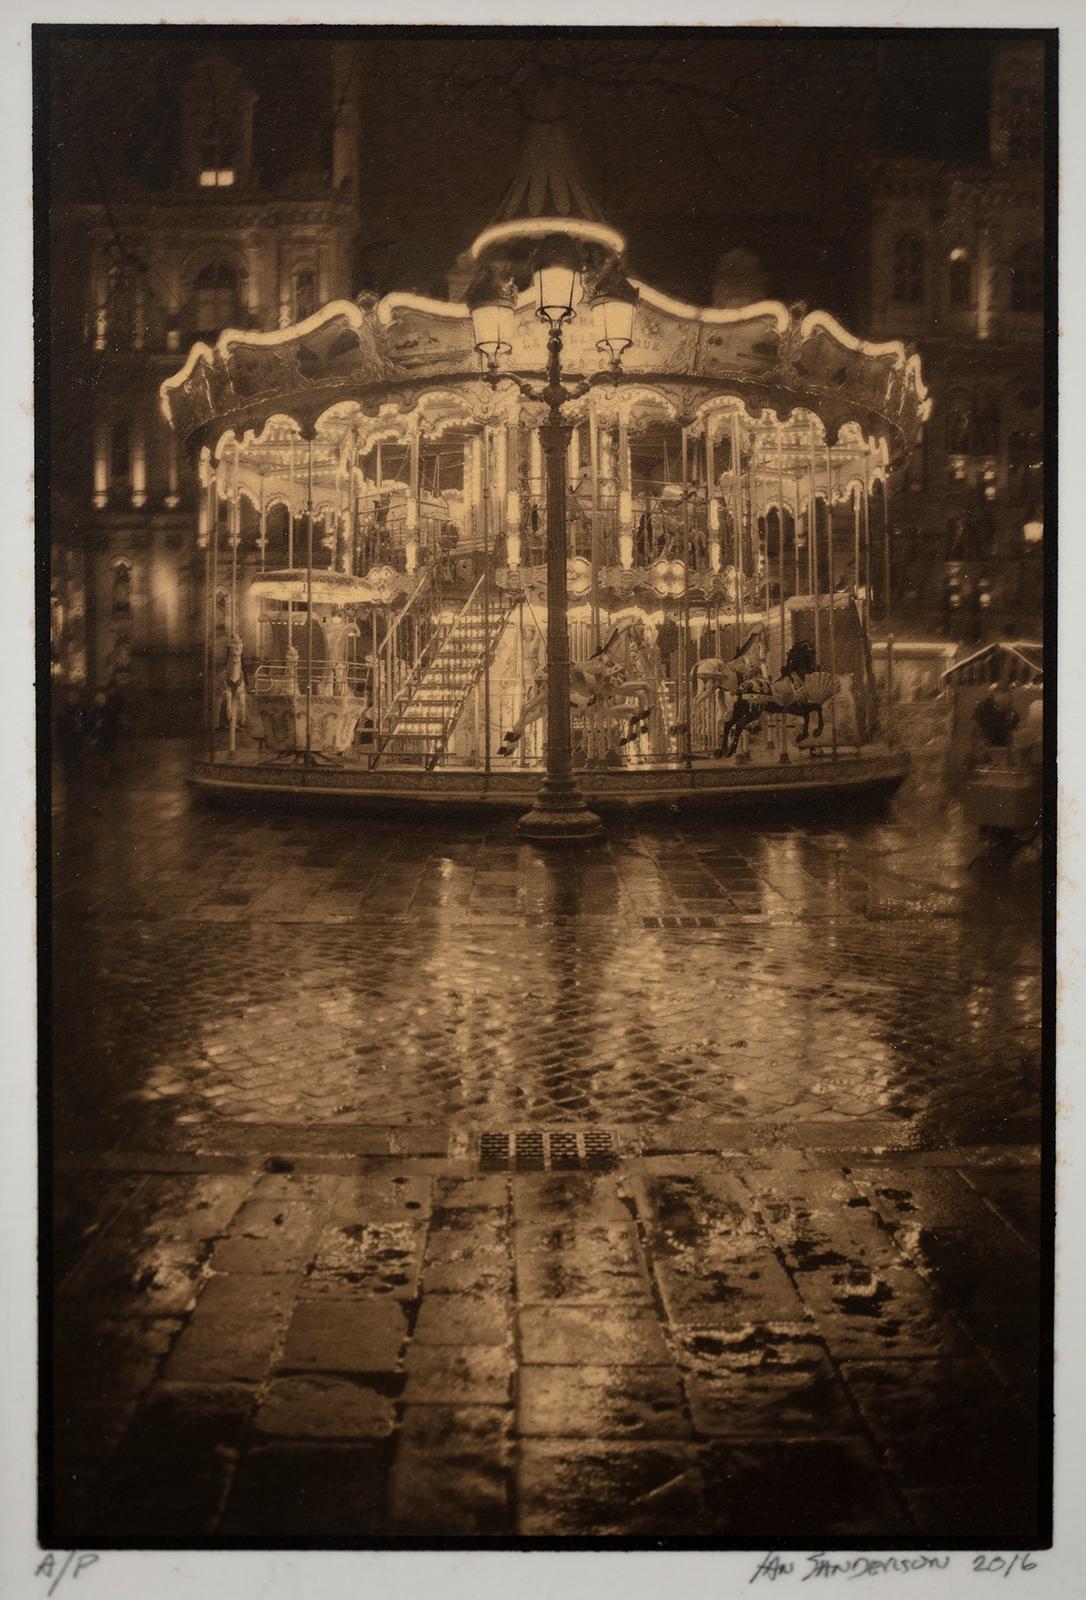 Framed Print-Carrousel-Platinum Palladium print on vellum over 24 carat gold A/P - Photograph by Ian Sanderson